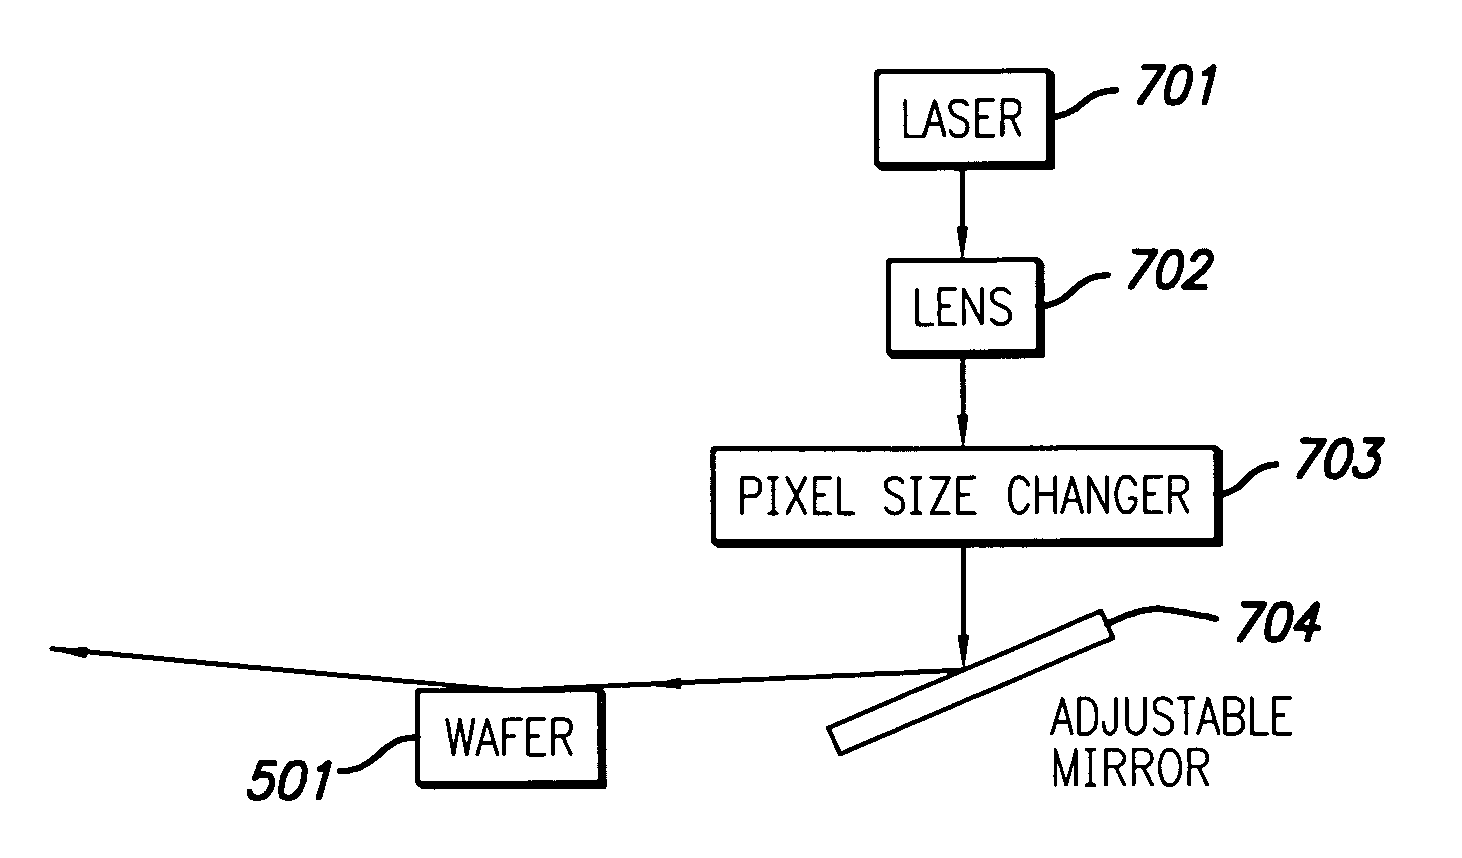 High throughput brightfield/darkfield wafer inspection system using advanced optical techniques